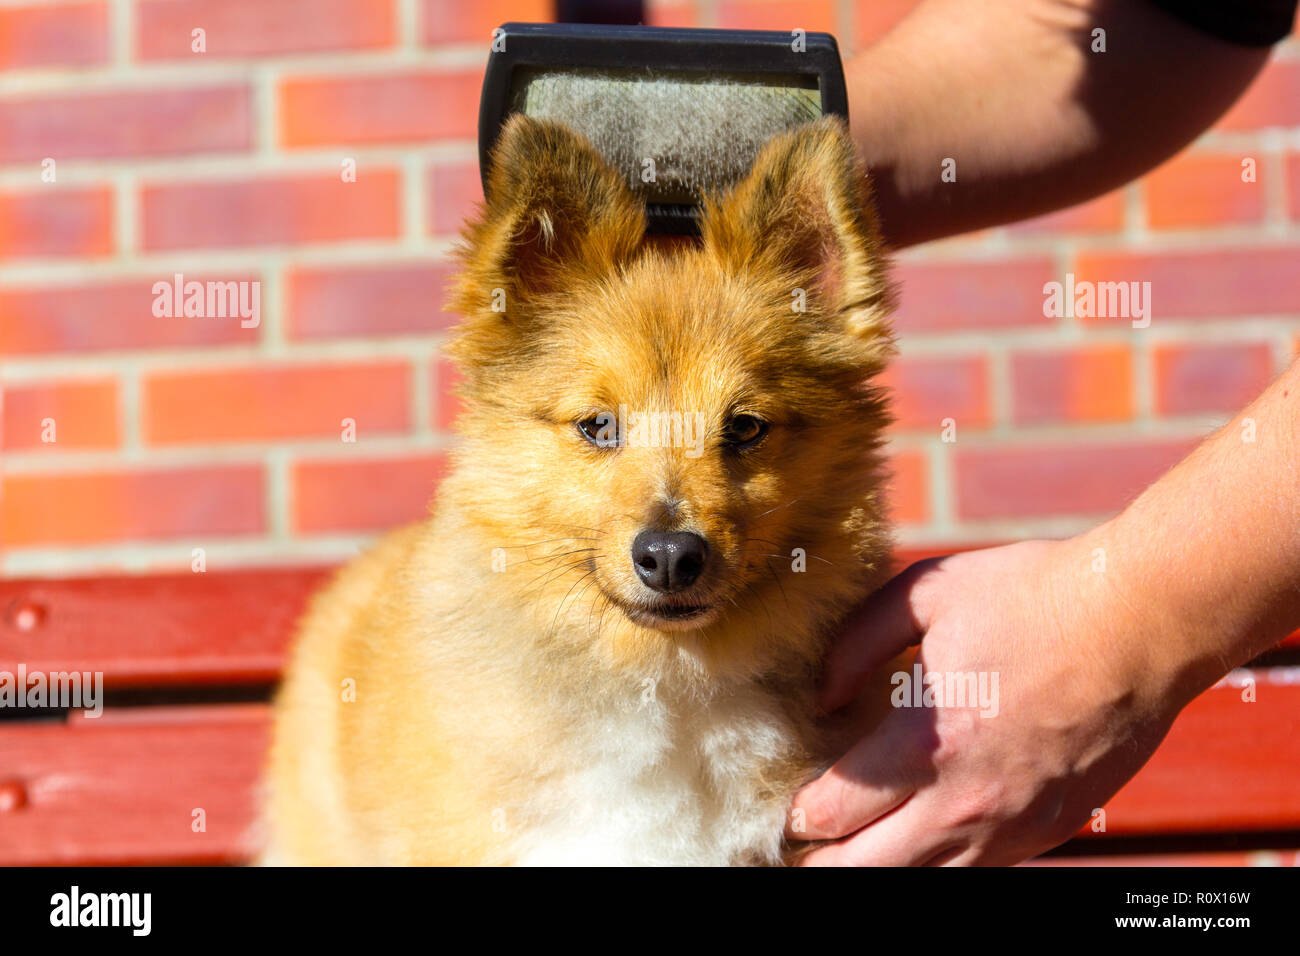 Brush grooming on a young shetland sheepdog Stock Photo